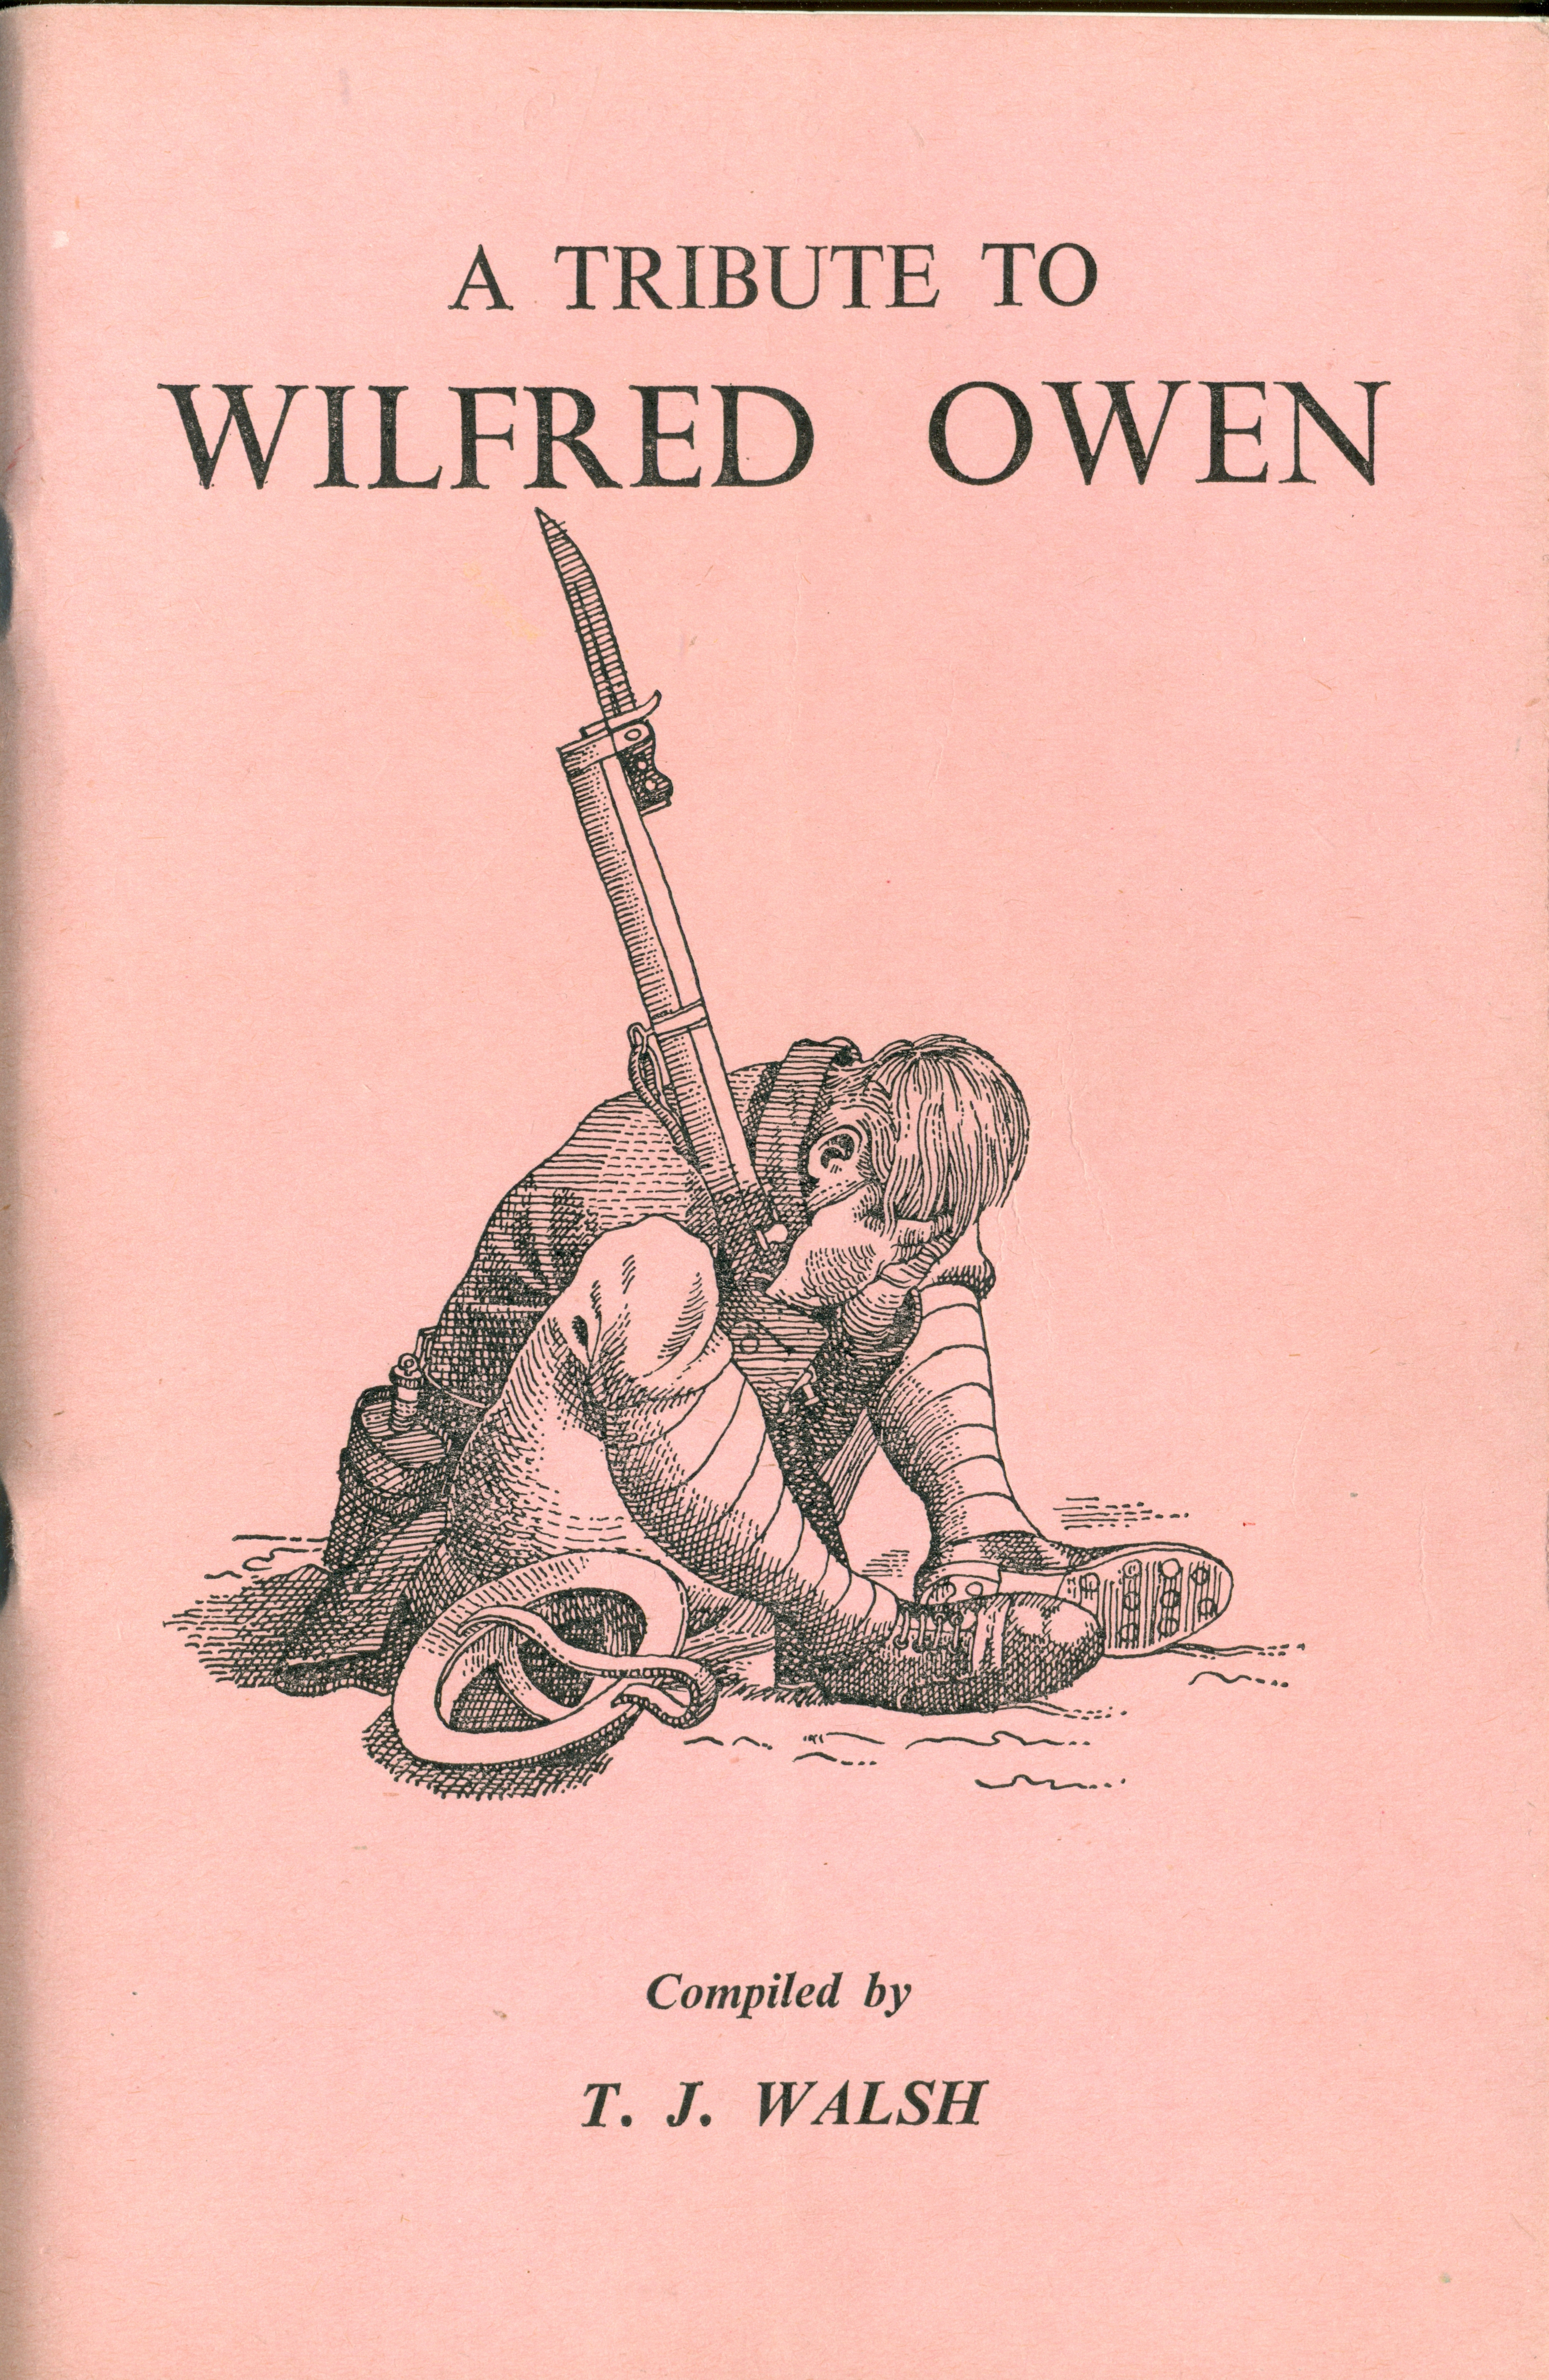 Jeff Walsh's book on Wilfred Owen